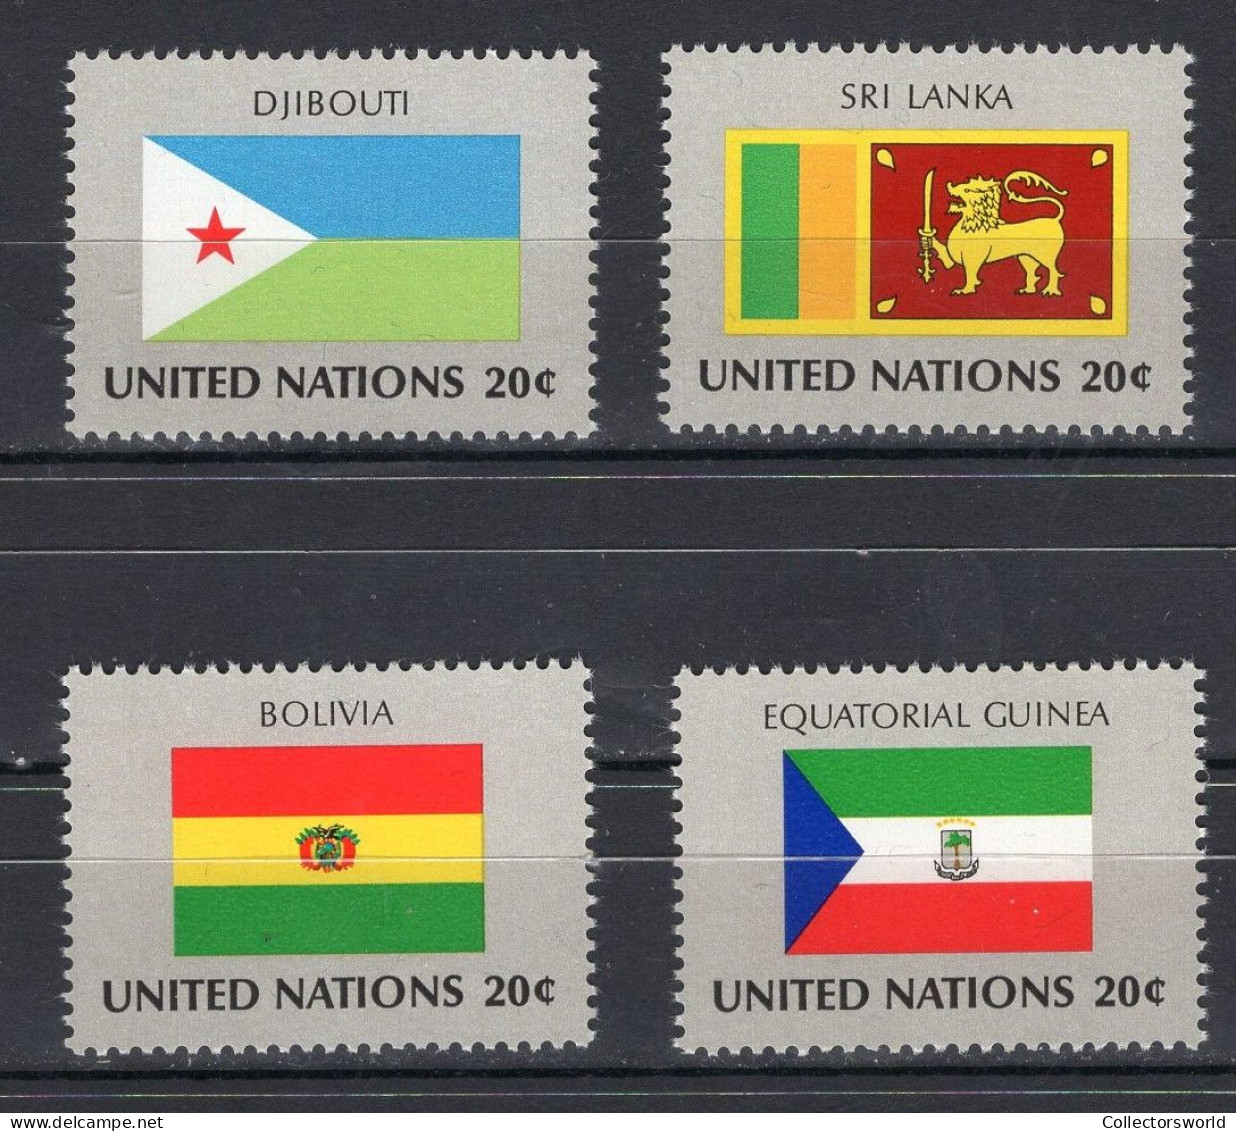 United Nations UN New York Serie 4v 1981 Flag Serie Sri Lanka Djibouti Bolivia Equatorial Guinea MNH - Nuovi